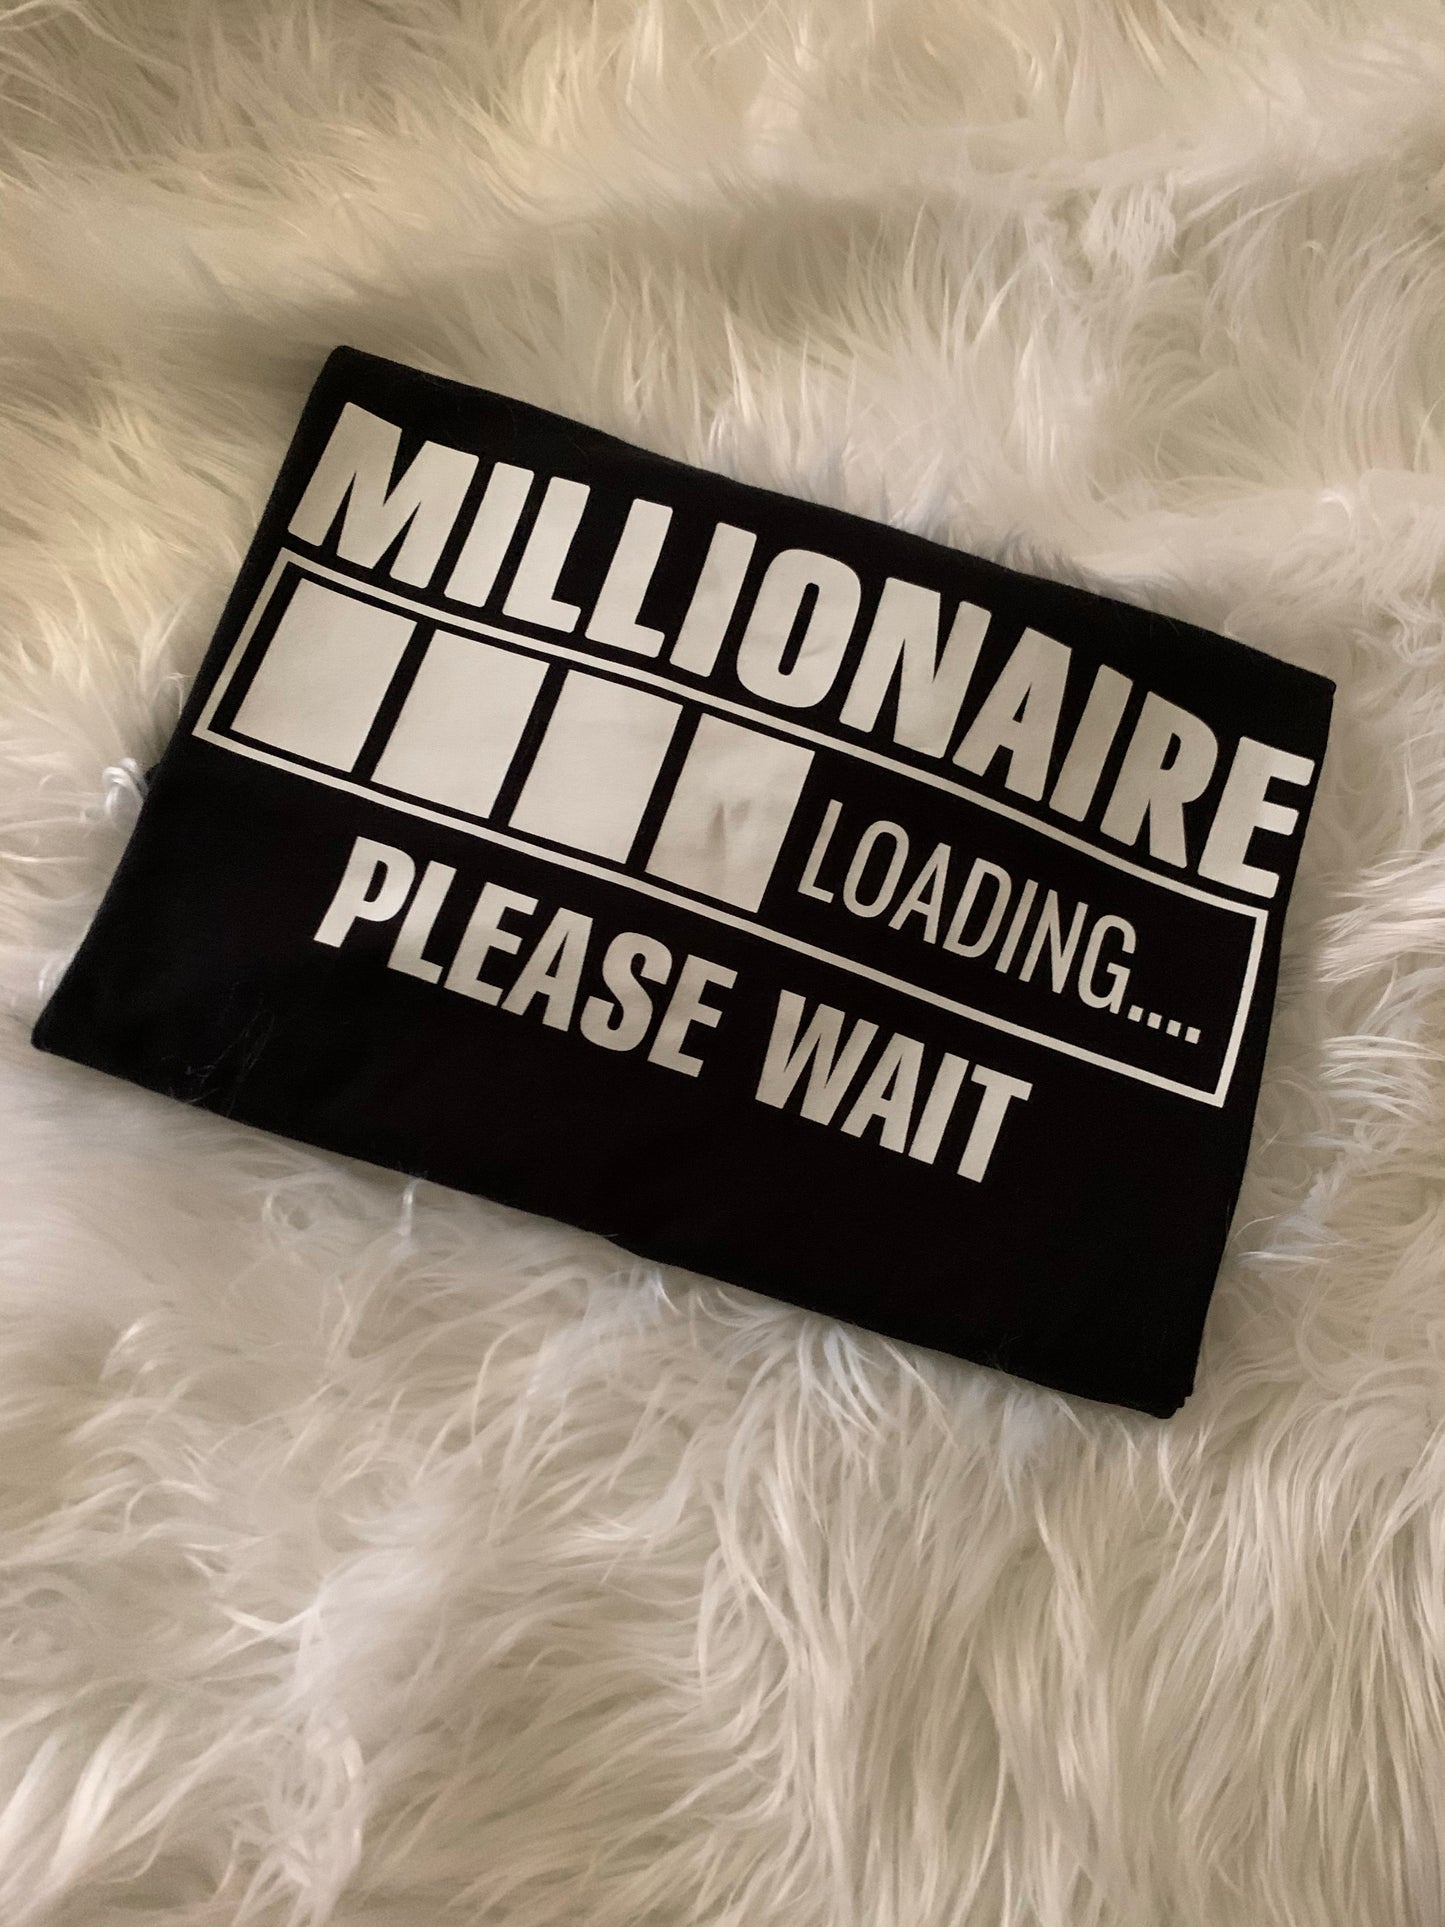 Millionaire... Loading